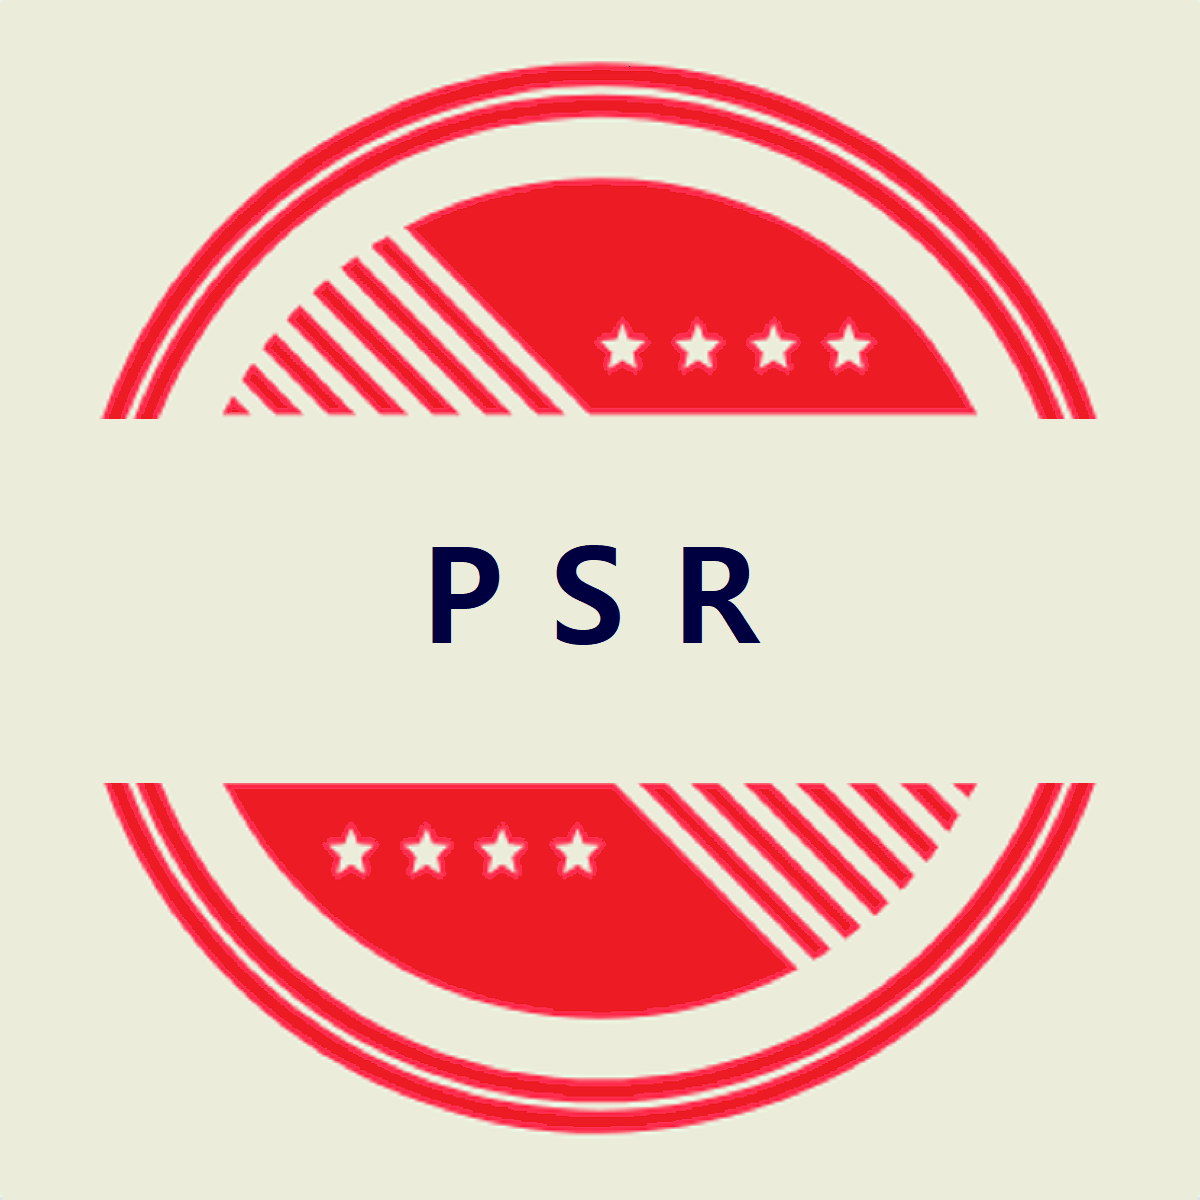 PSR에 관한 글 제목